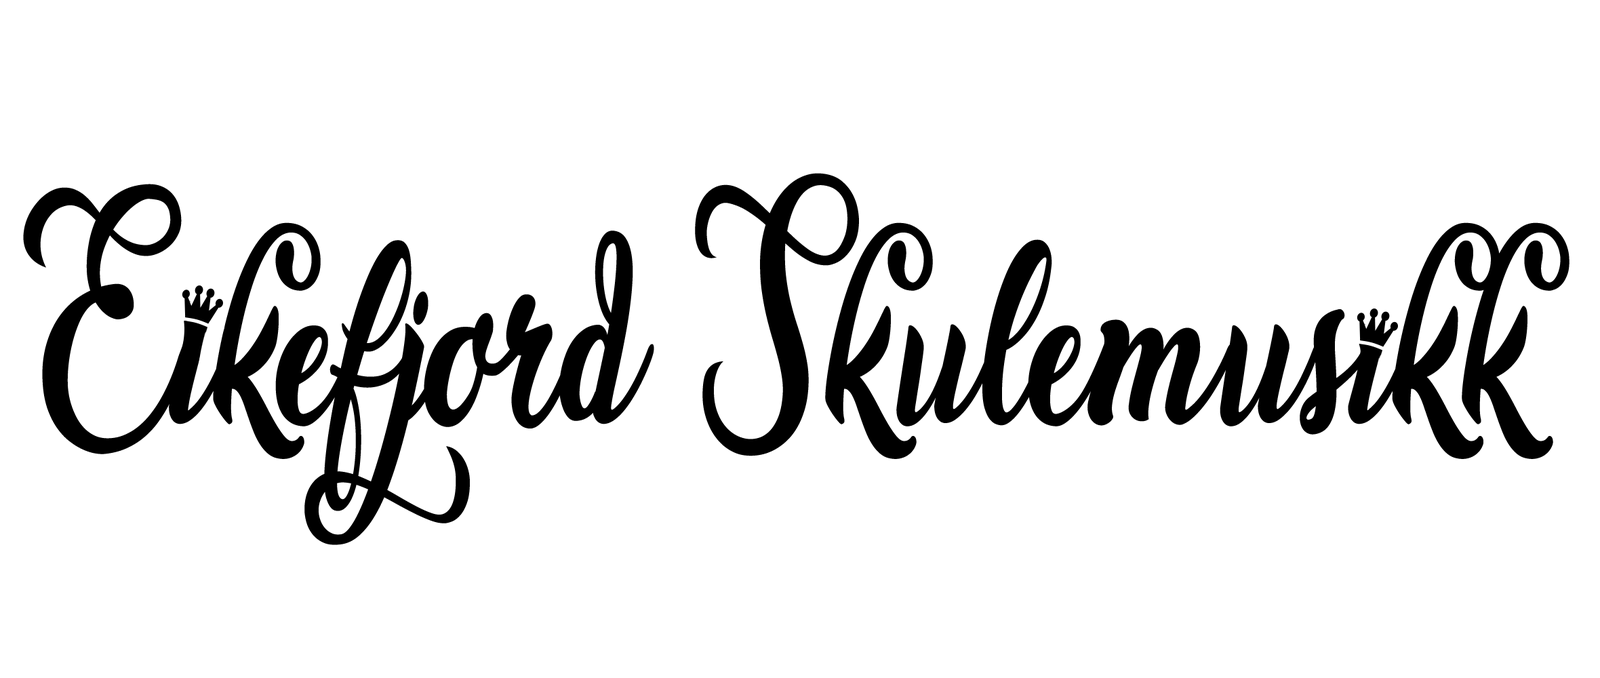 Image logo tekst